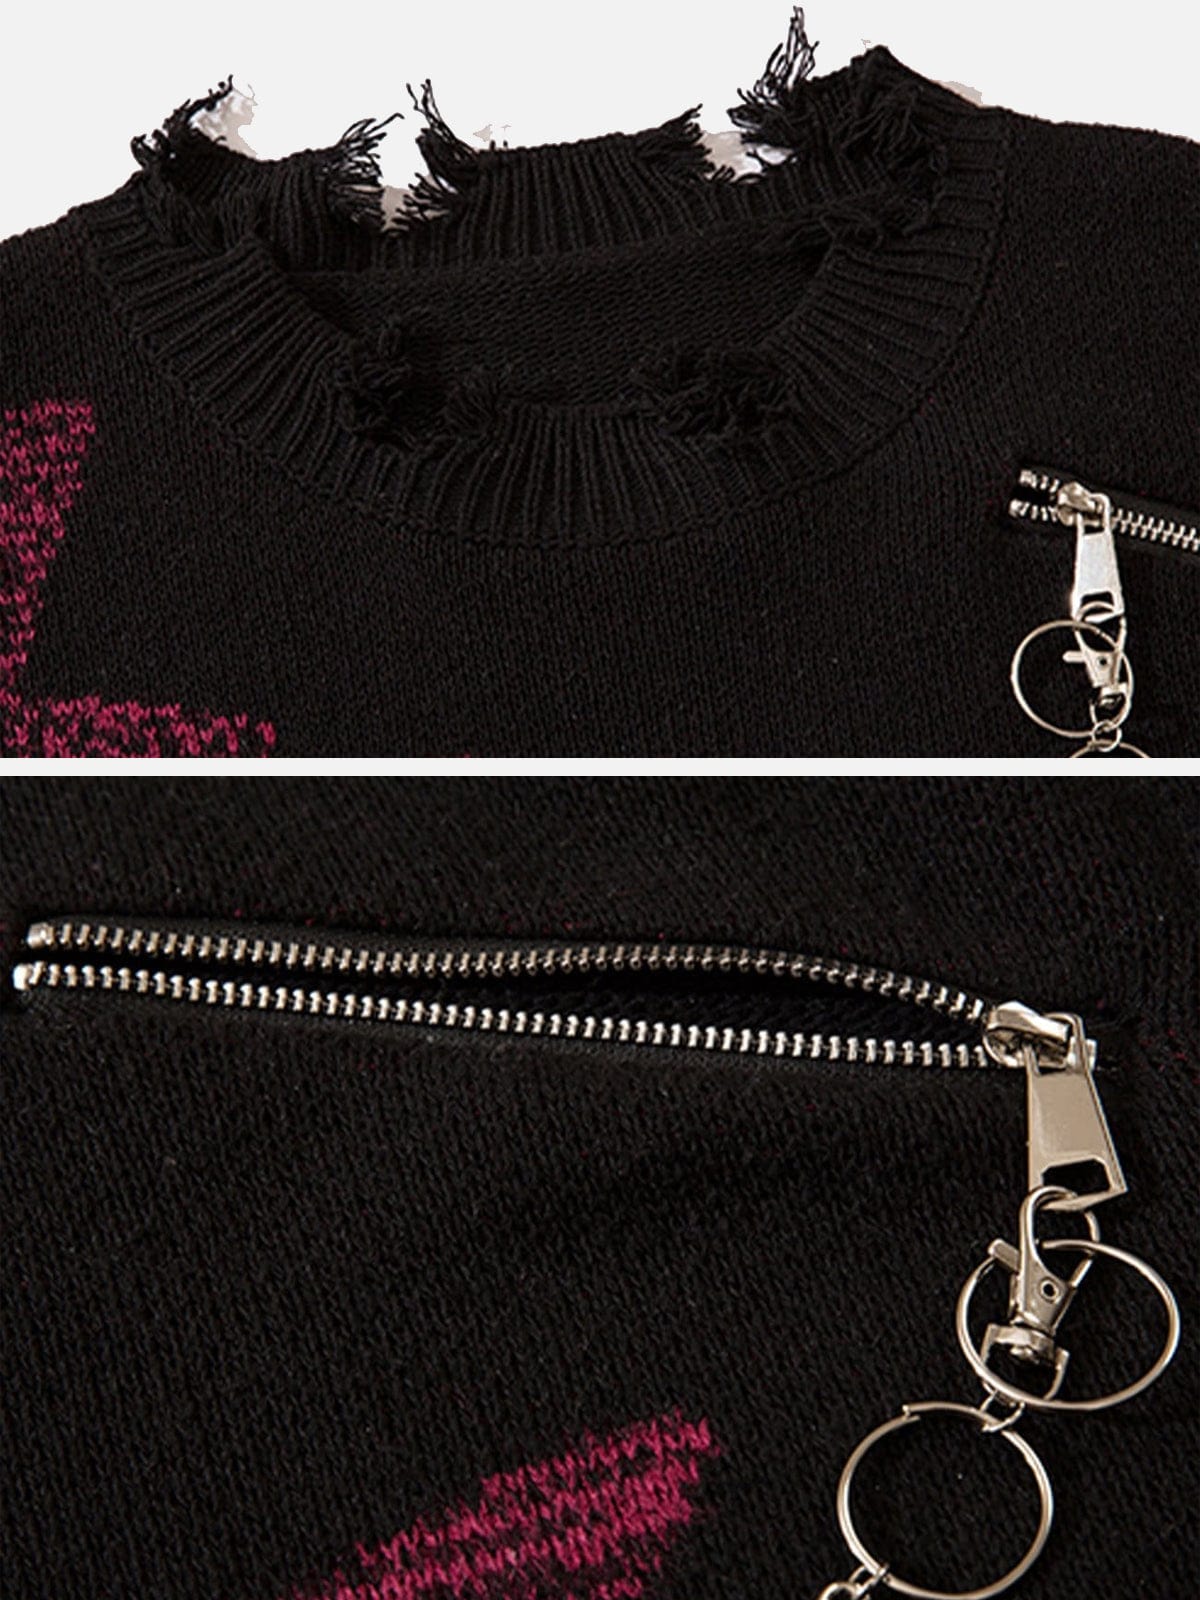 NEV Irregular Ripped Skeleton Zipper Chain Knit Sweater